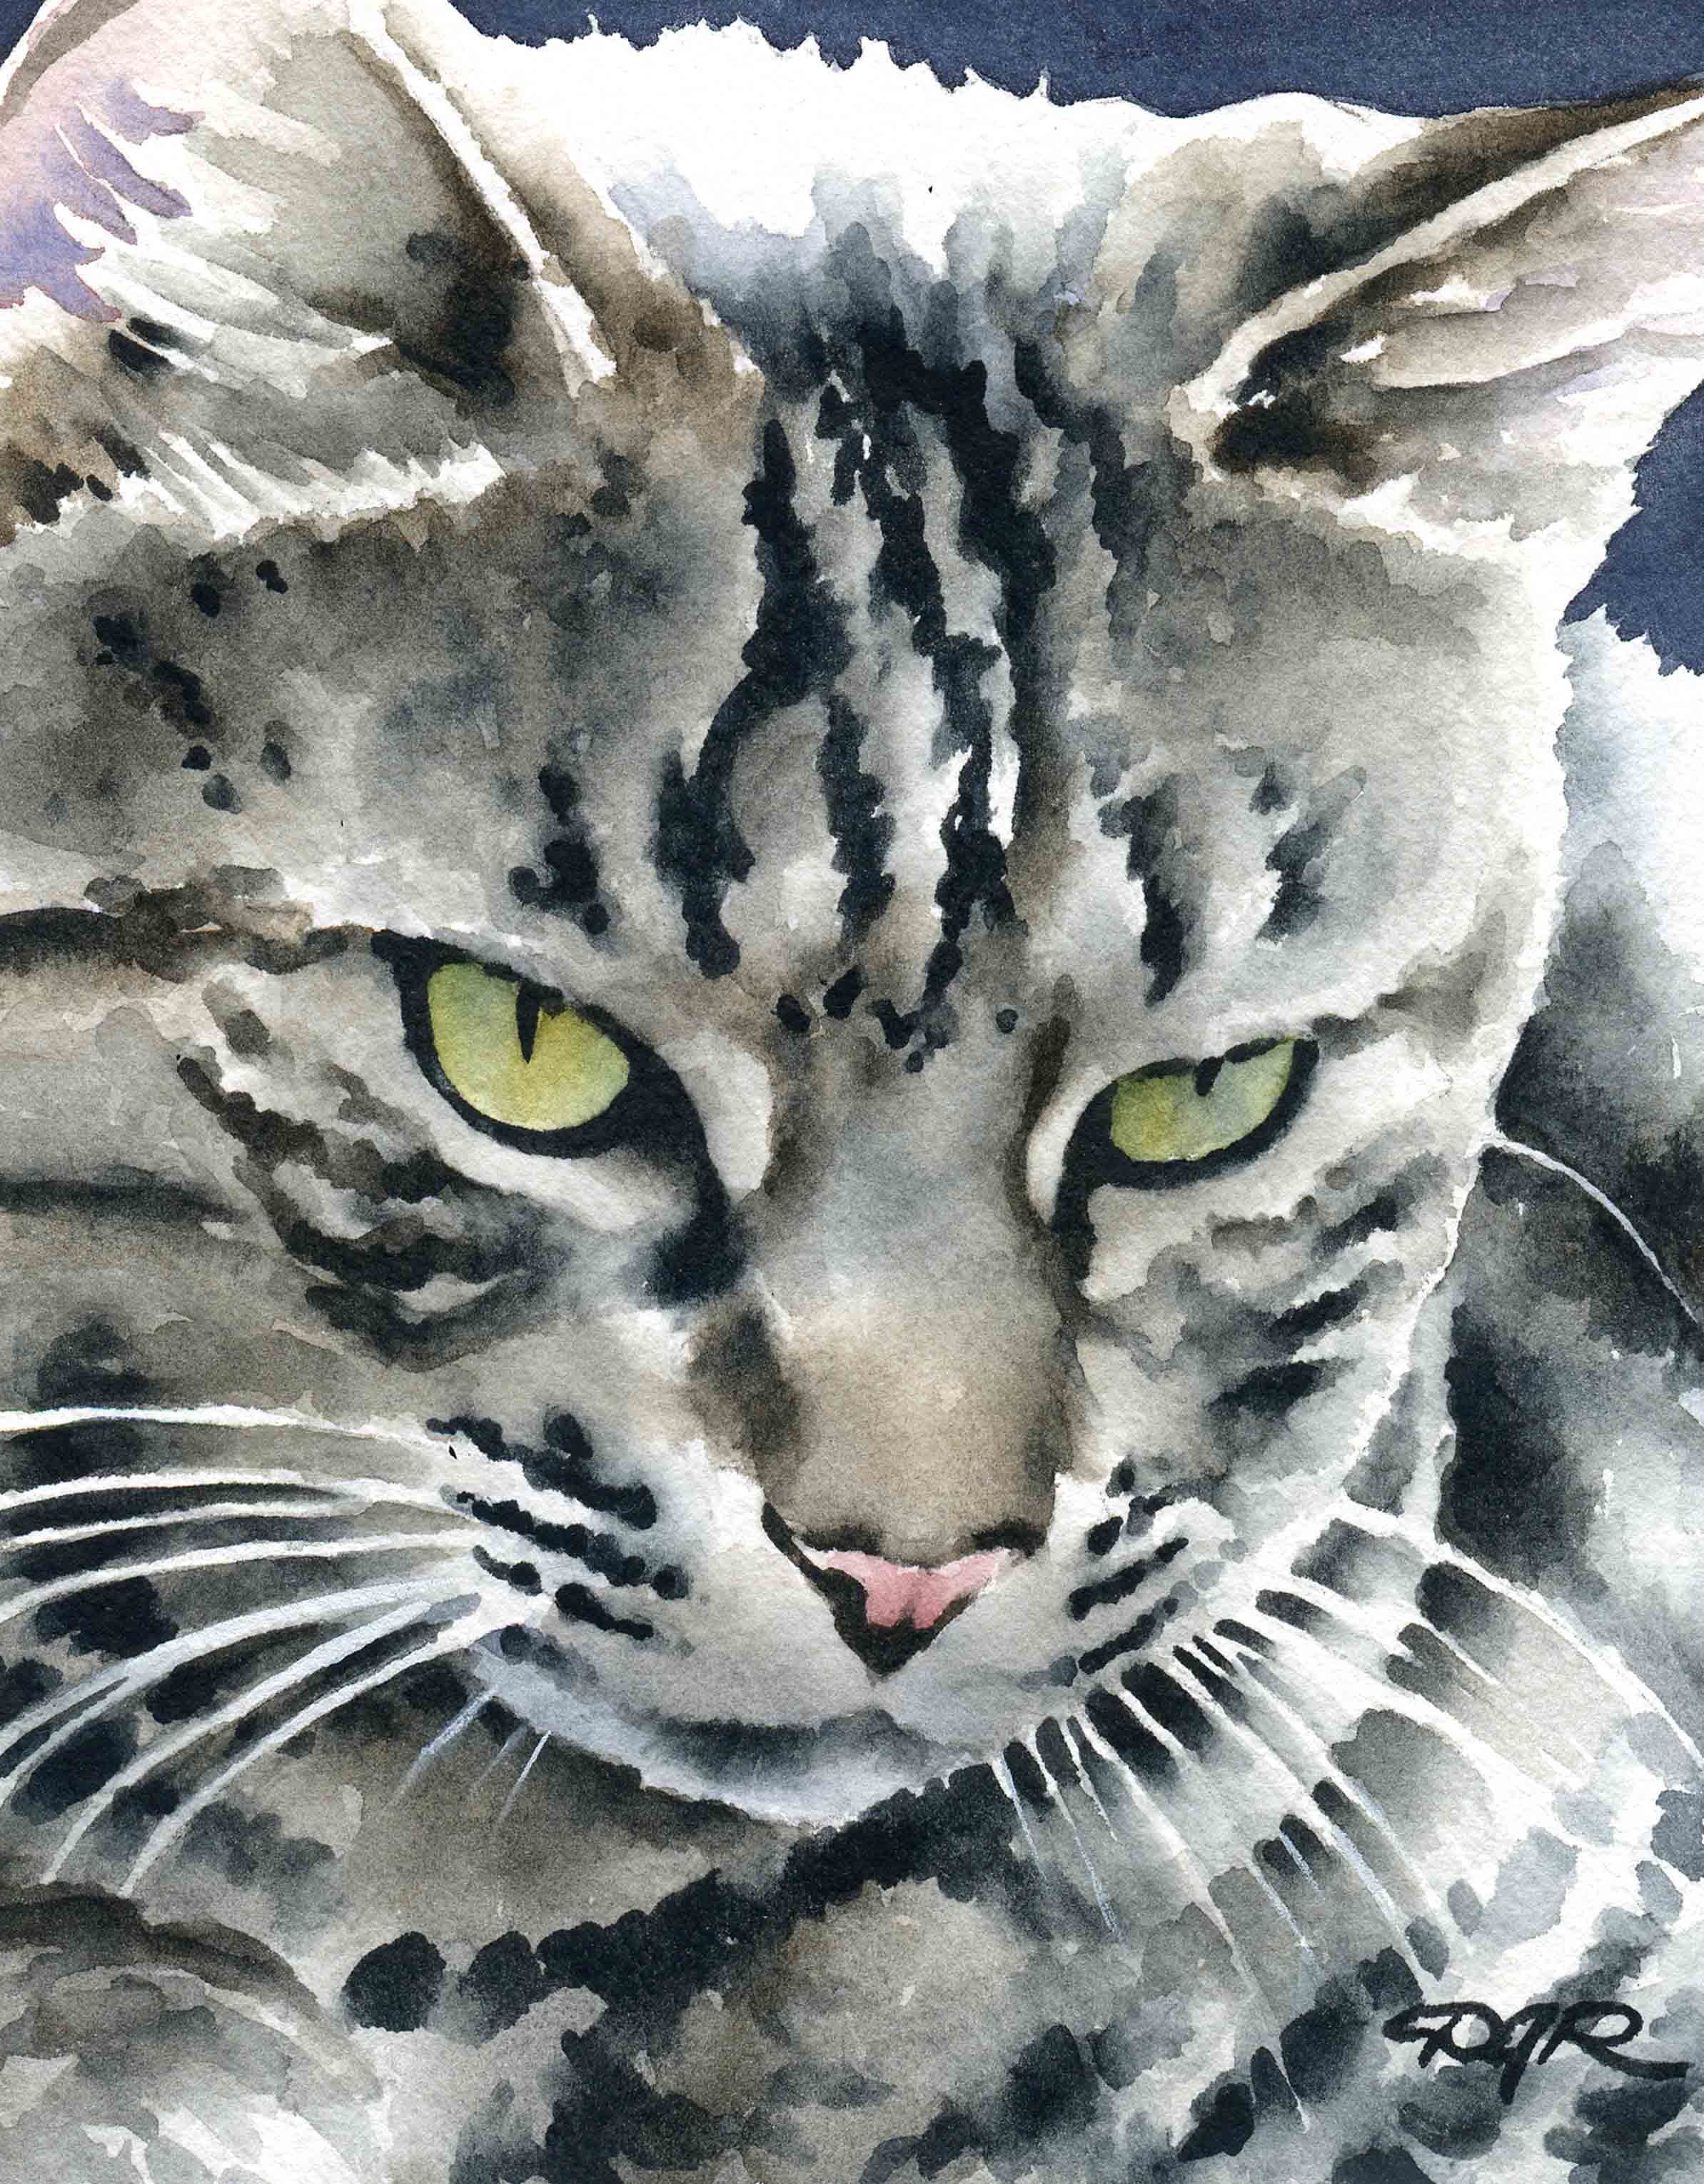 Tabby Cat Art Print, Tiger Cat Print, Striped Tabby Cat Art, Gray and Black  Tabby Cat Watercolor, Tiger Cat Portrait by P. Tarlow 